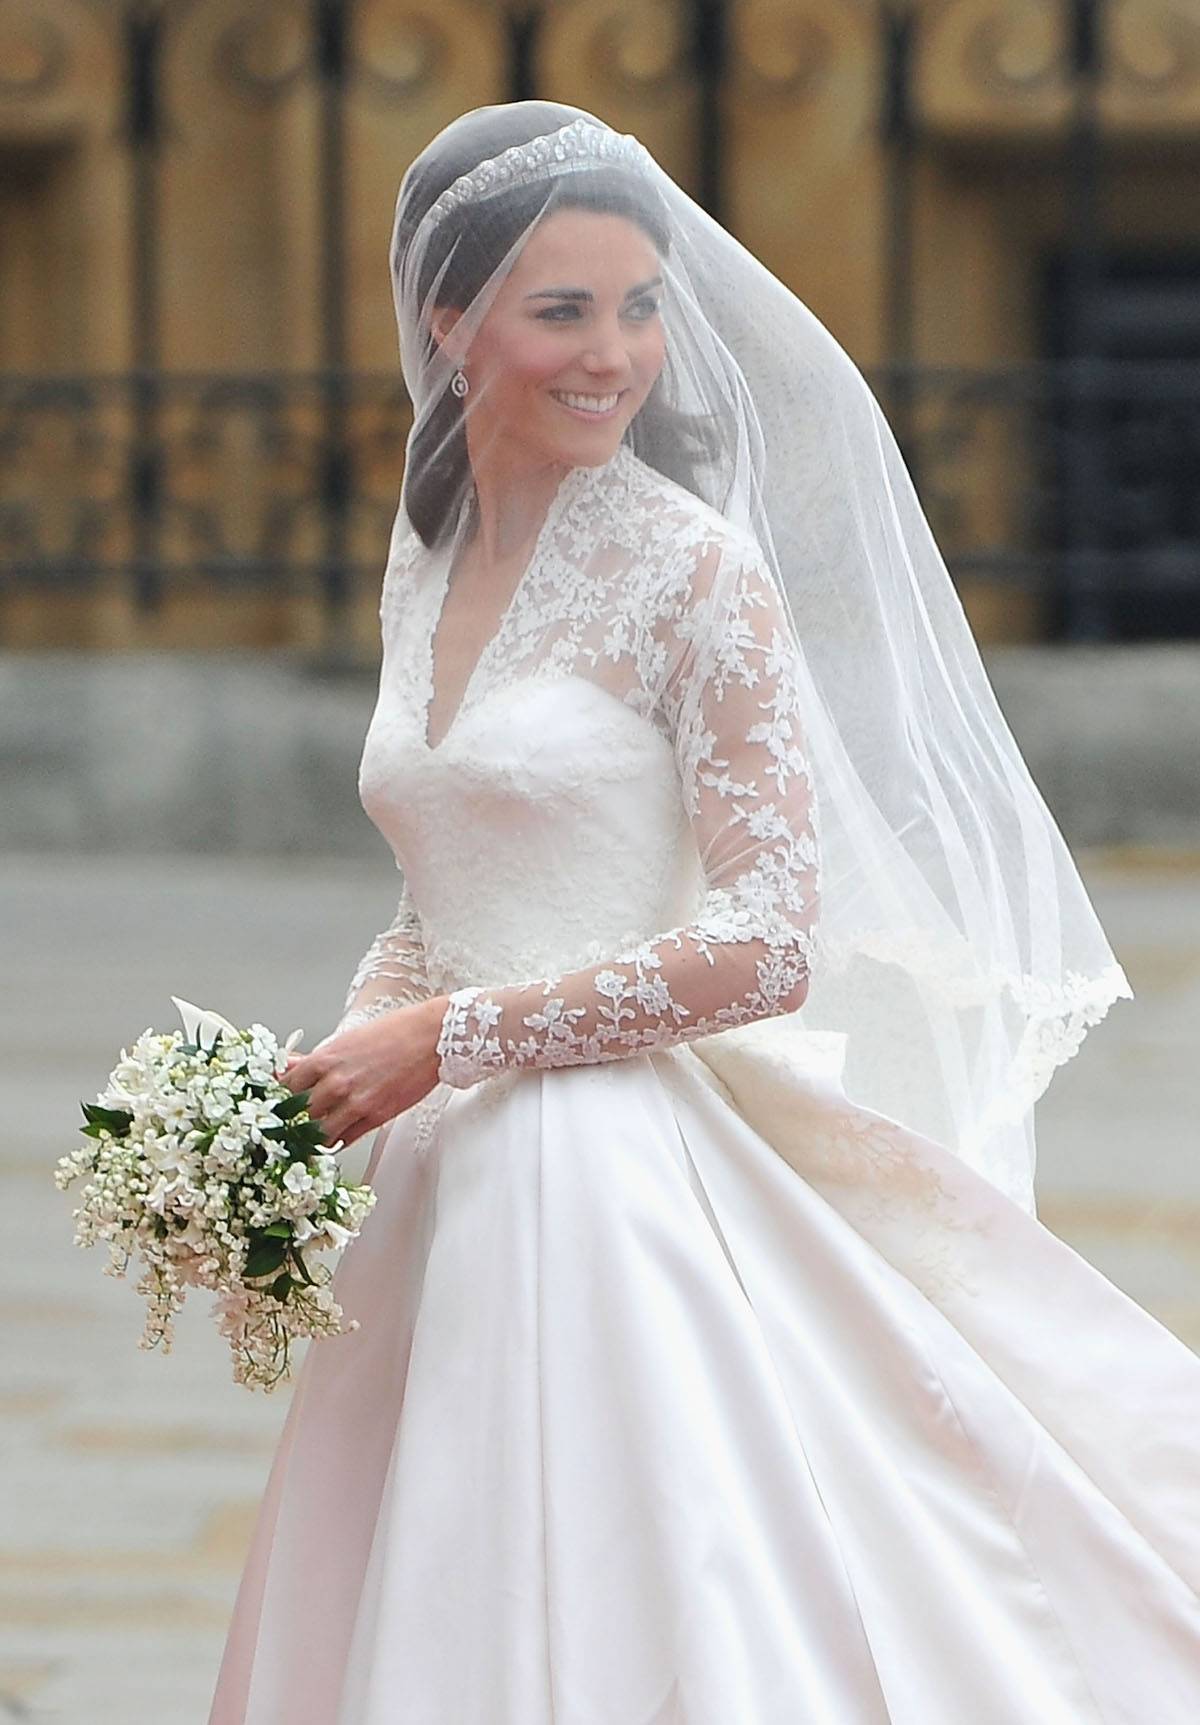 Księżna Kate w welonie typu fingertip veil (Fot. Getty Images)